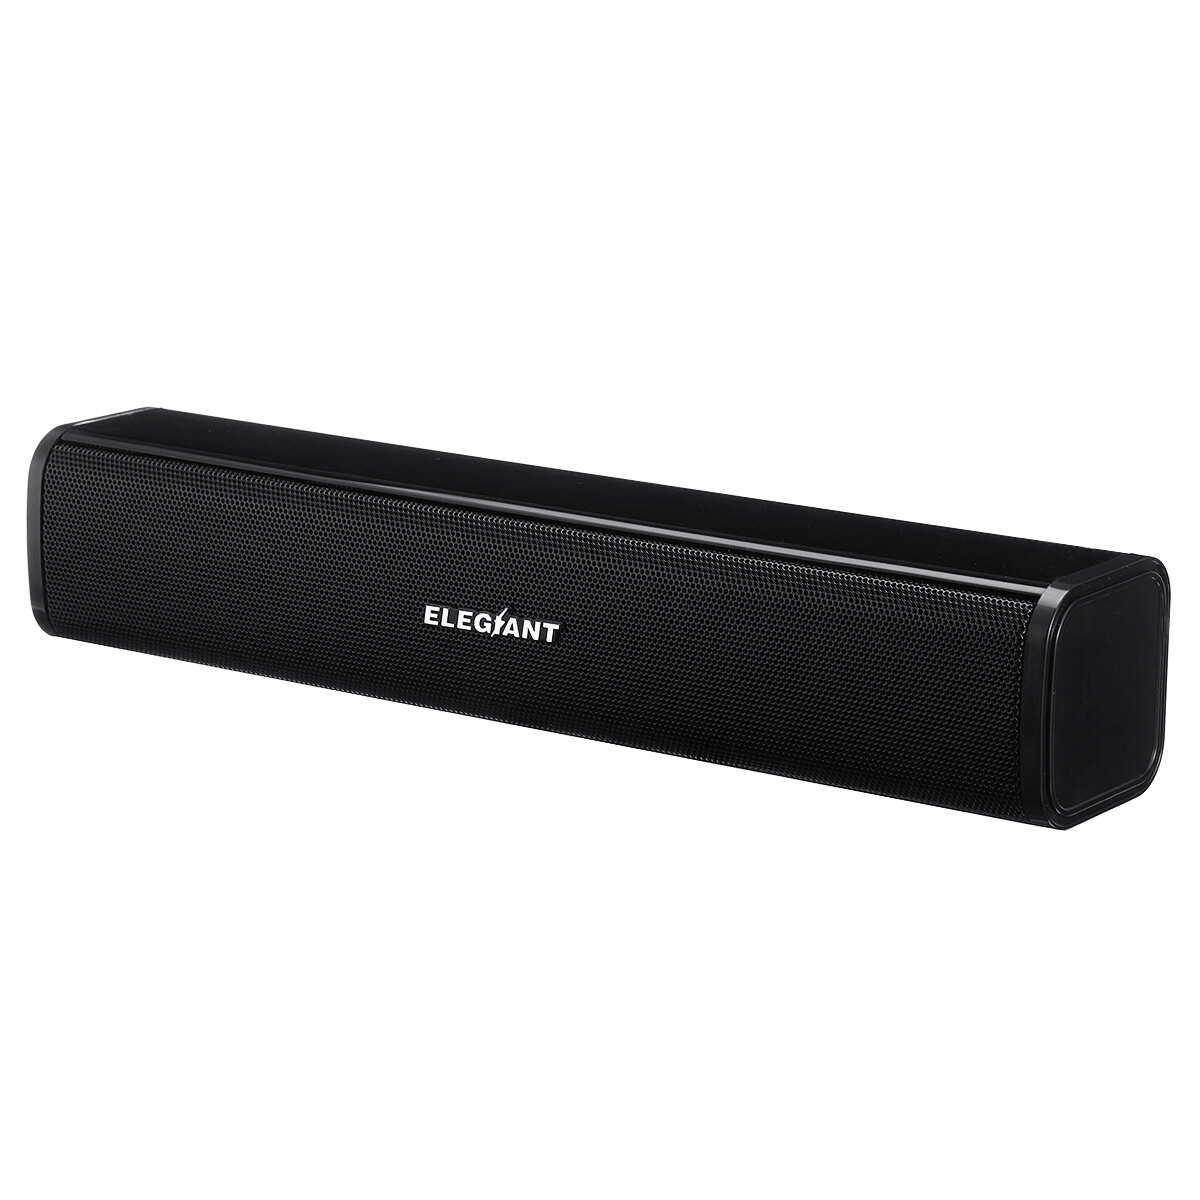 Image of ELEGIANT SR050 6W Powerful Multimedia HiFi Bass Portable USB SoundBar Speakers with Volume Control for PC Desktop